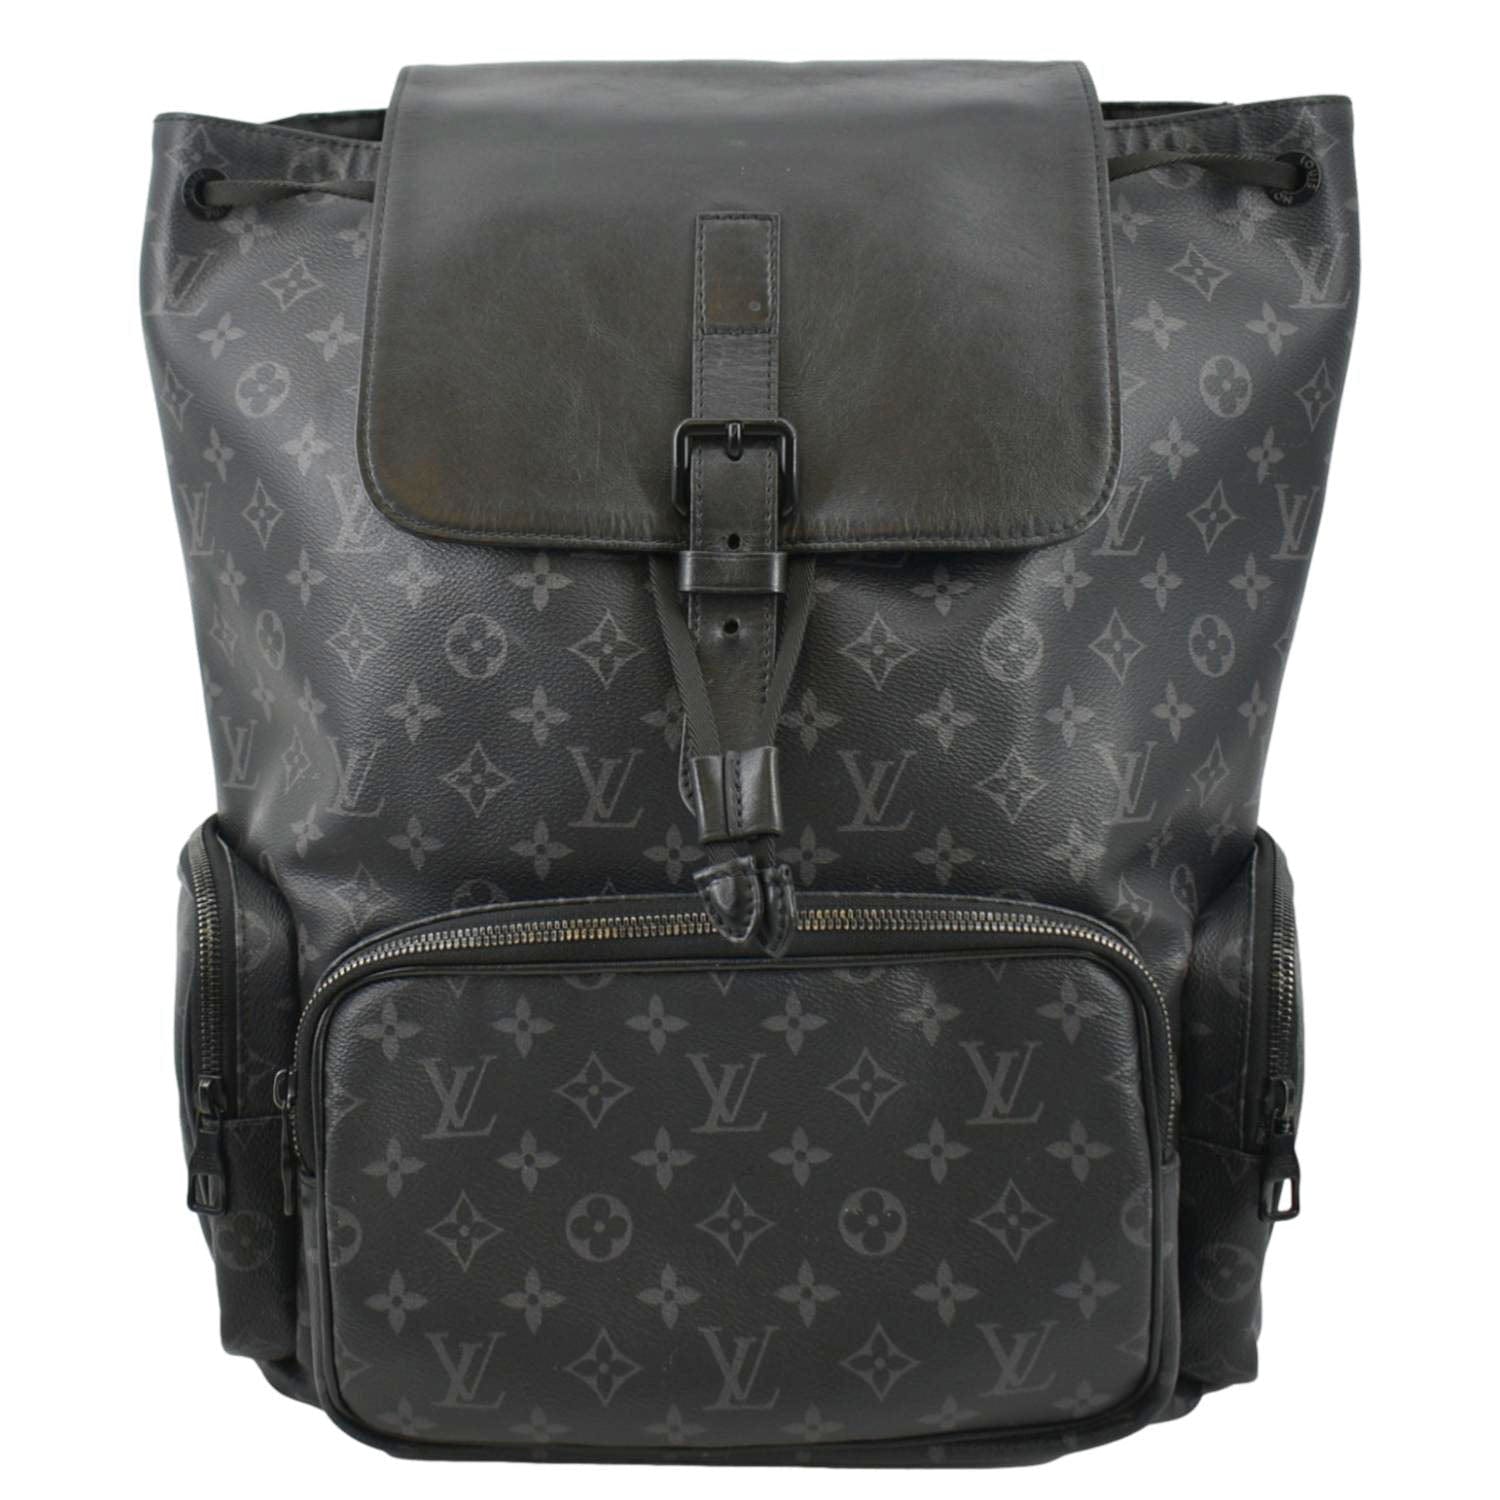 Shop Louis Vuitton Backpack trio (M45538) by Cocona☆彡